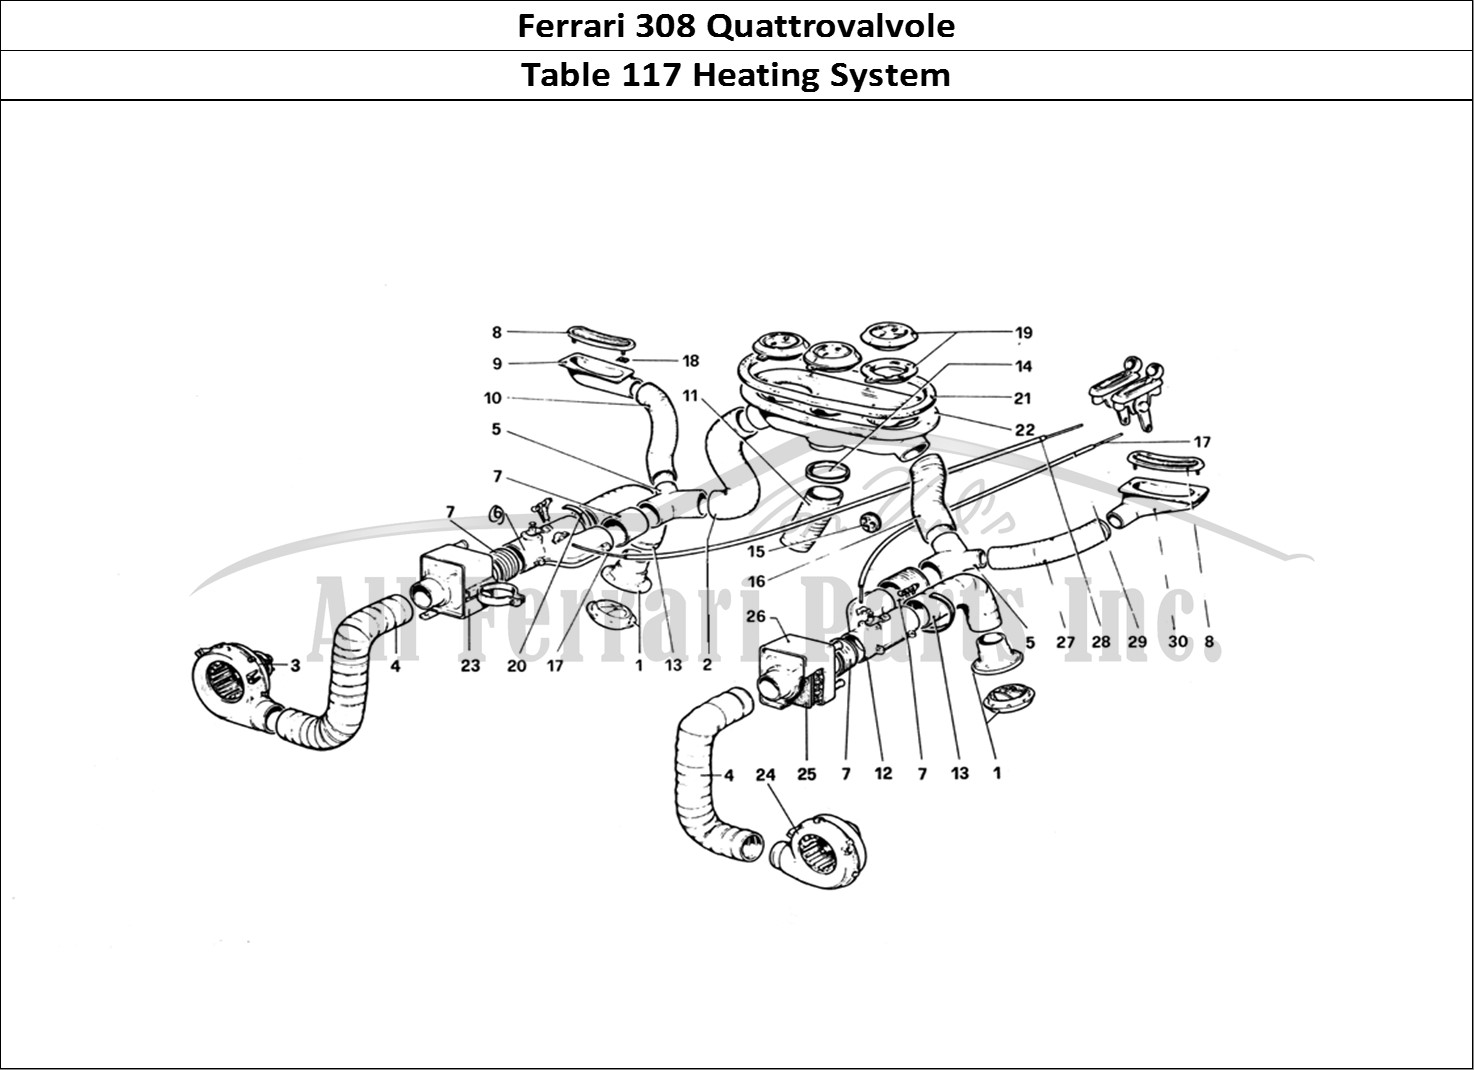 Ferrari Parts Ferrari 308 Quattrovalvole (1985) Page 117 Heating System